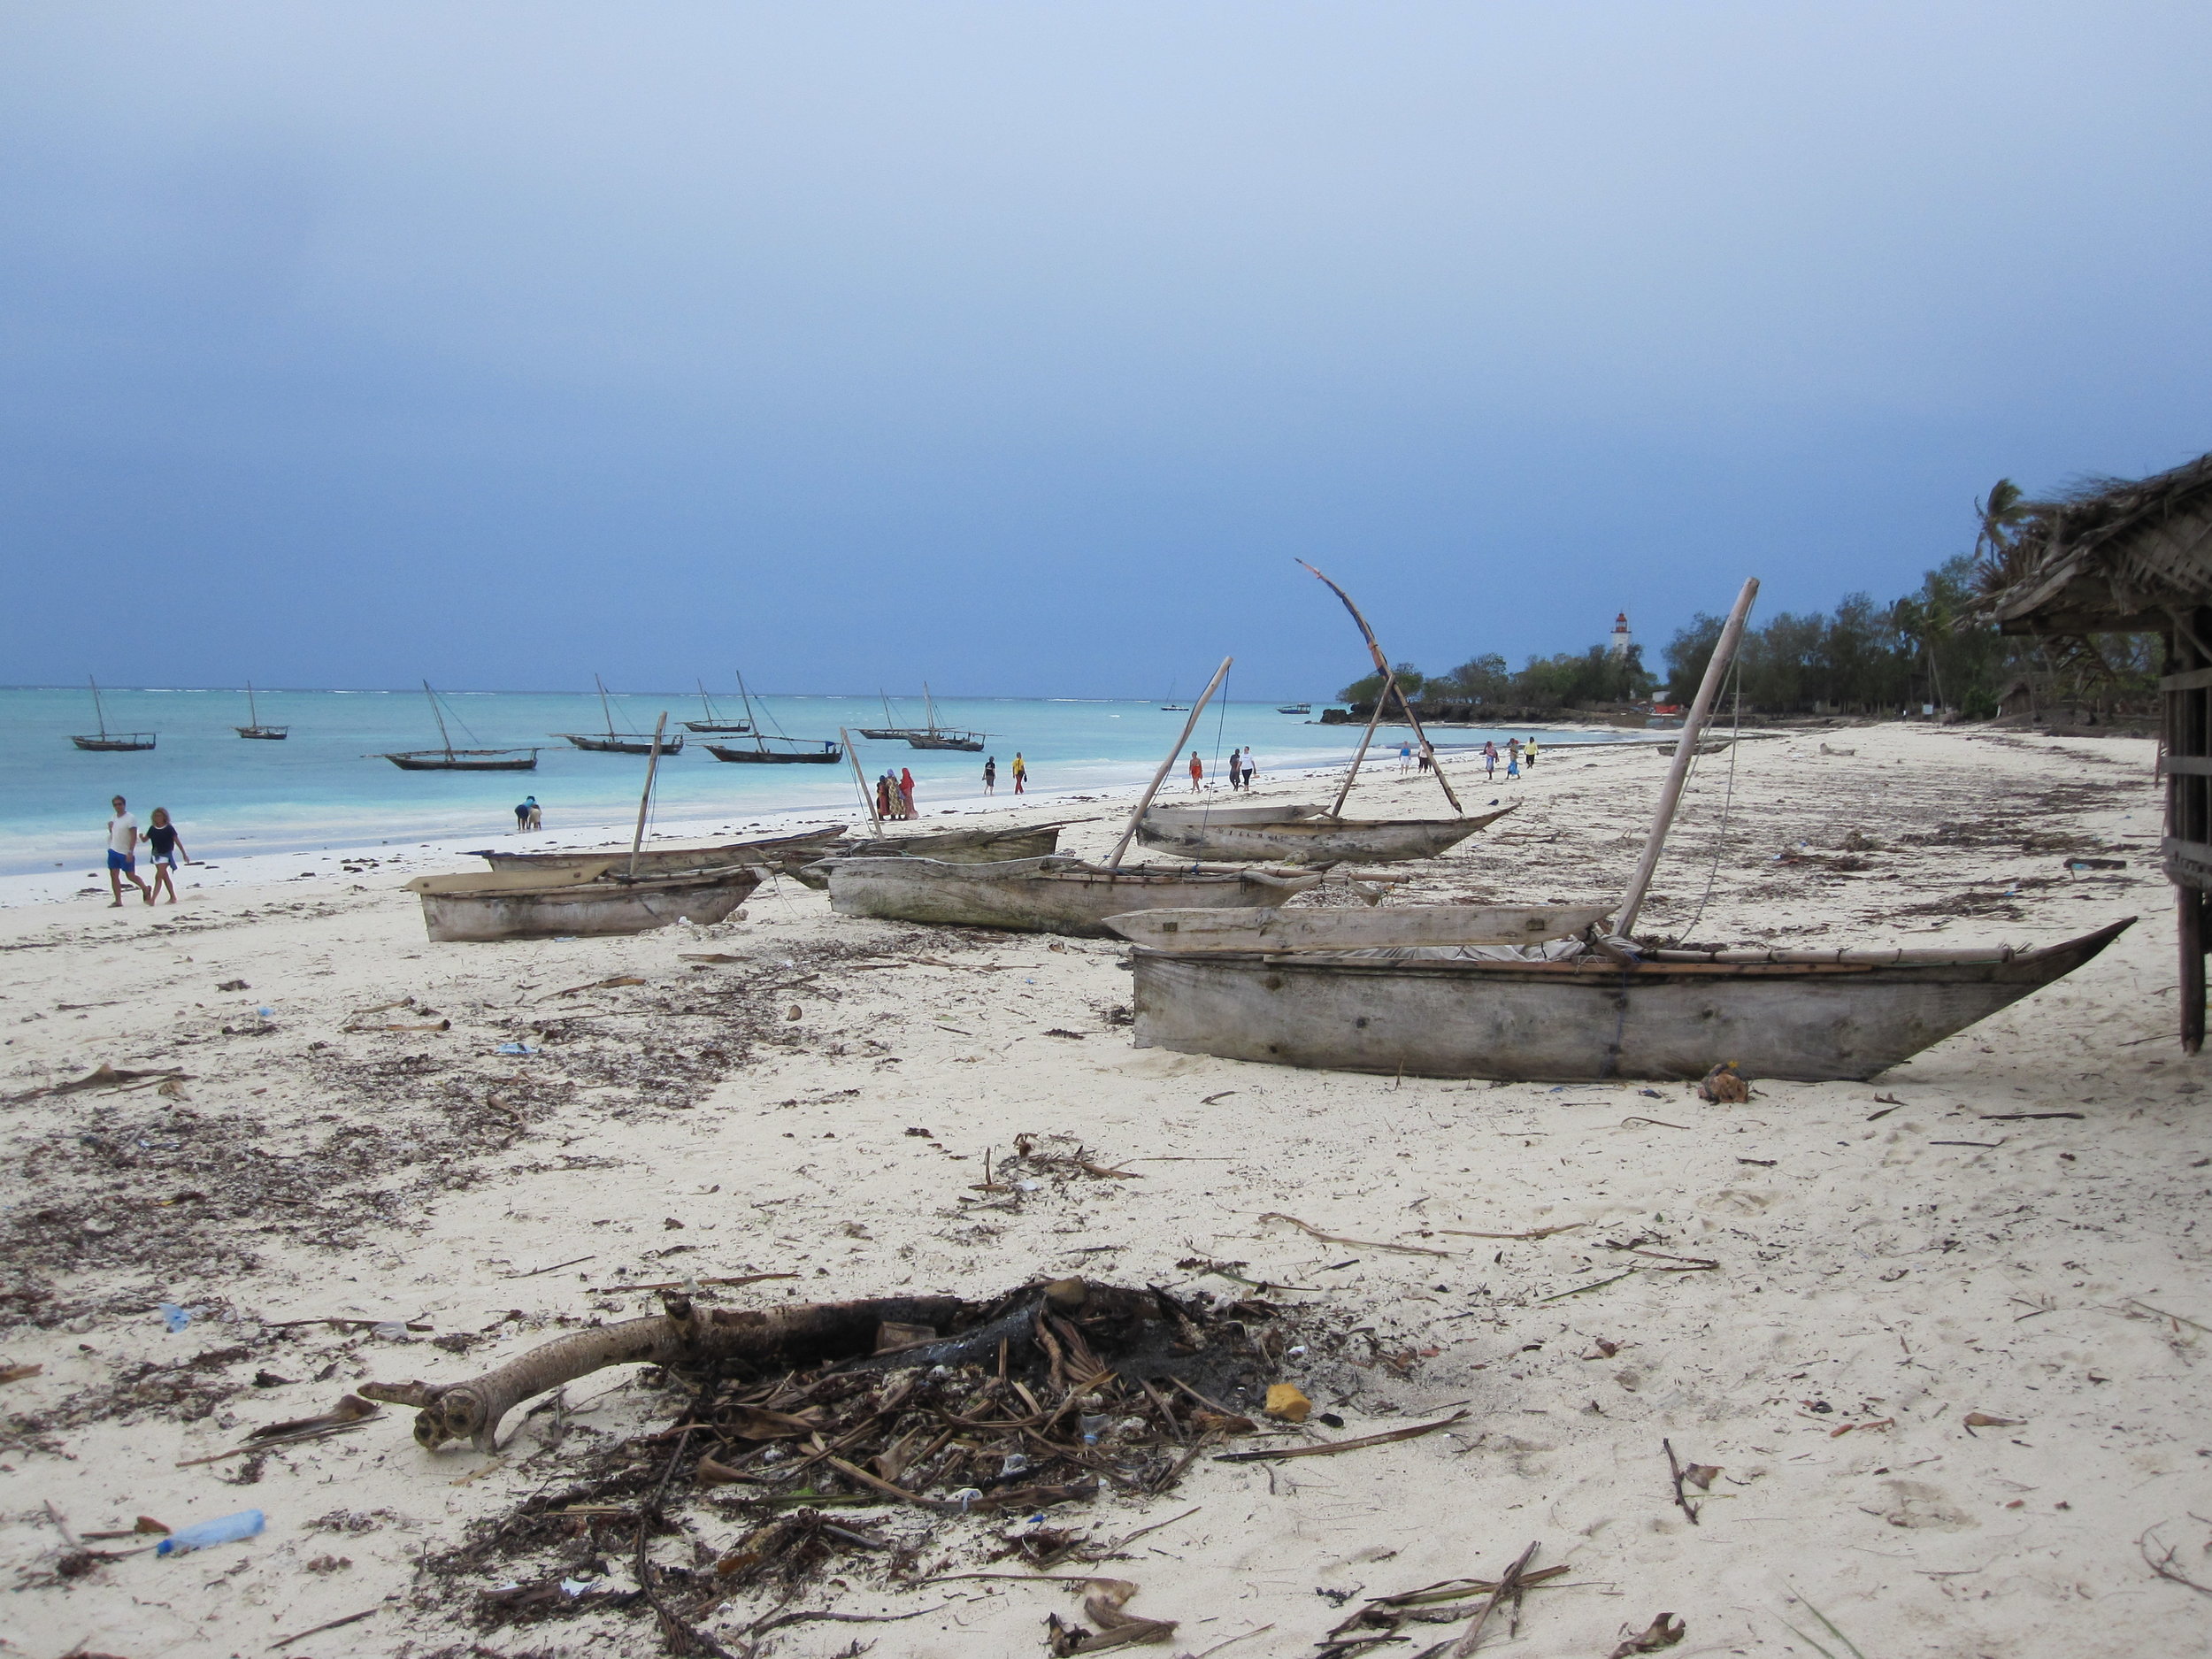 Dhows on the beach in Zanzibar